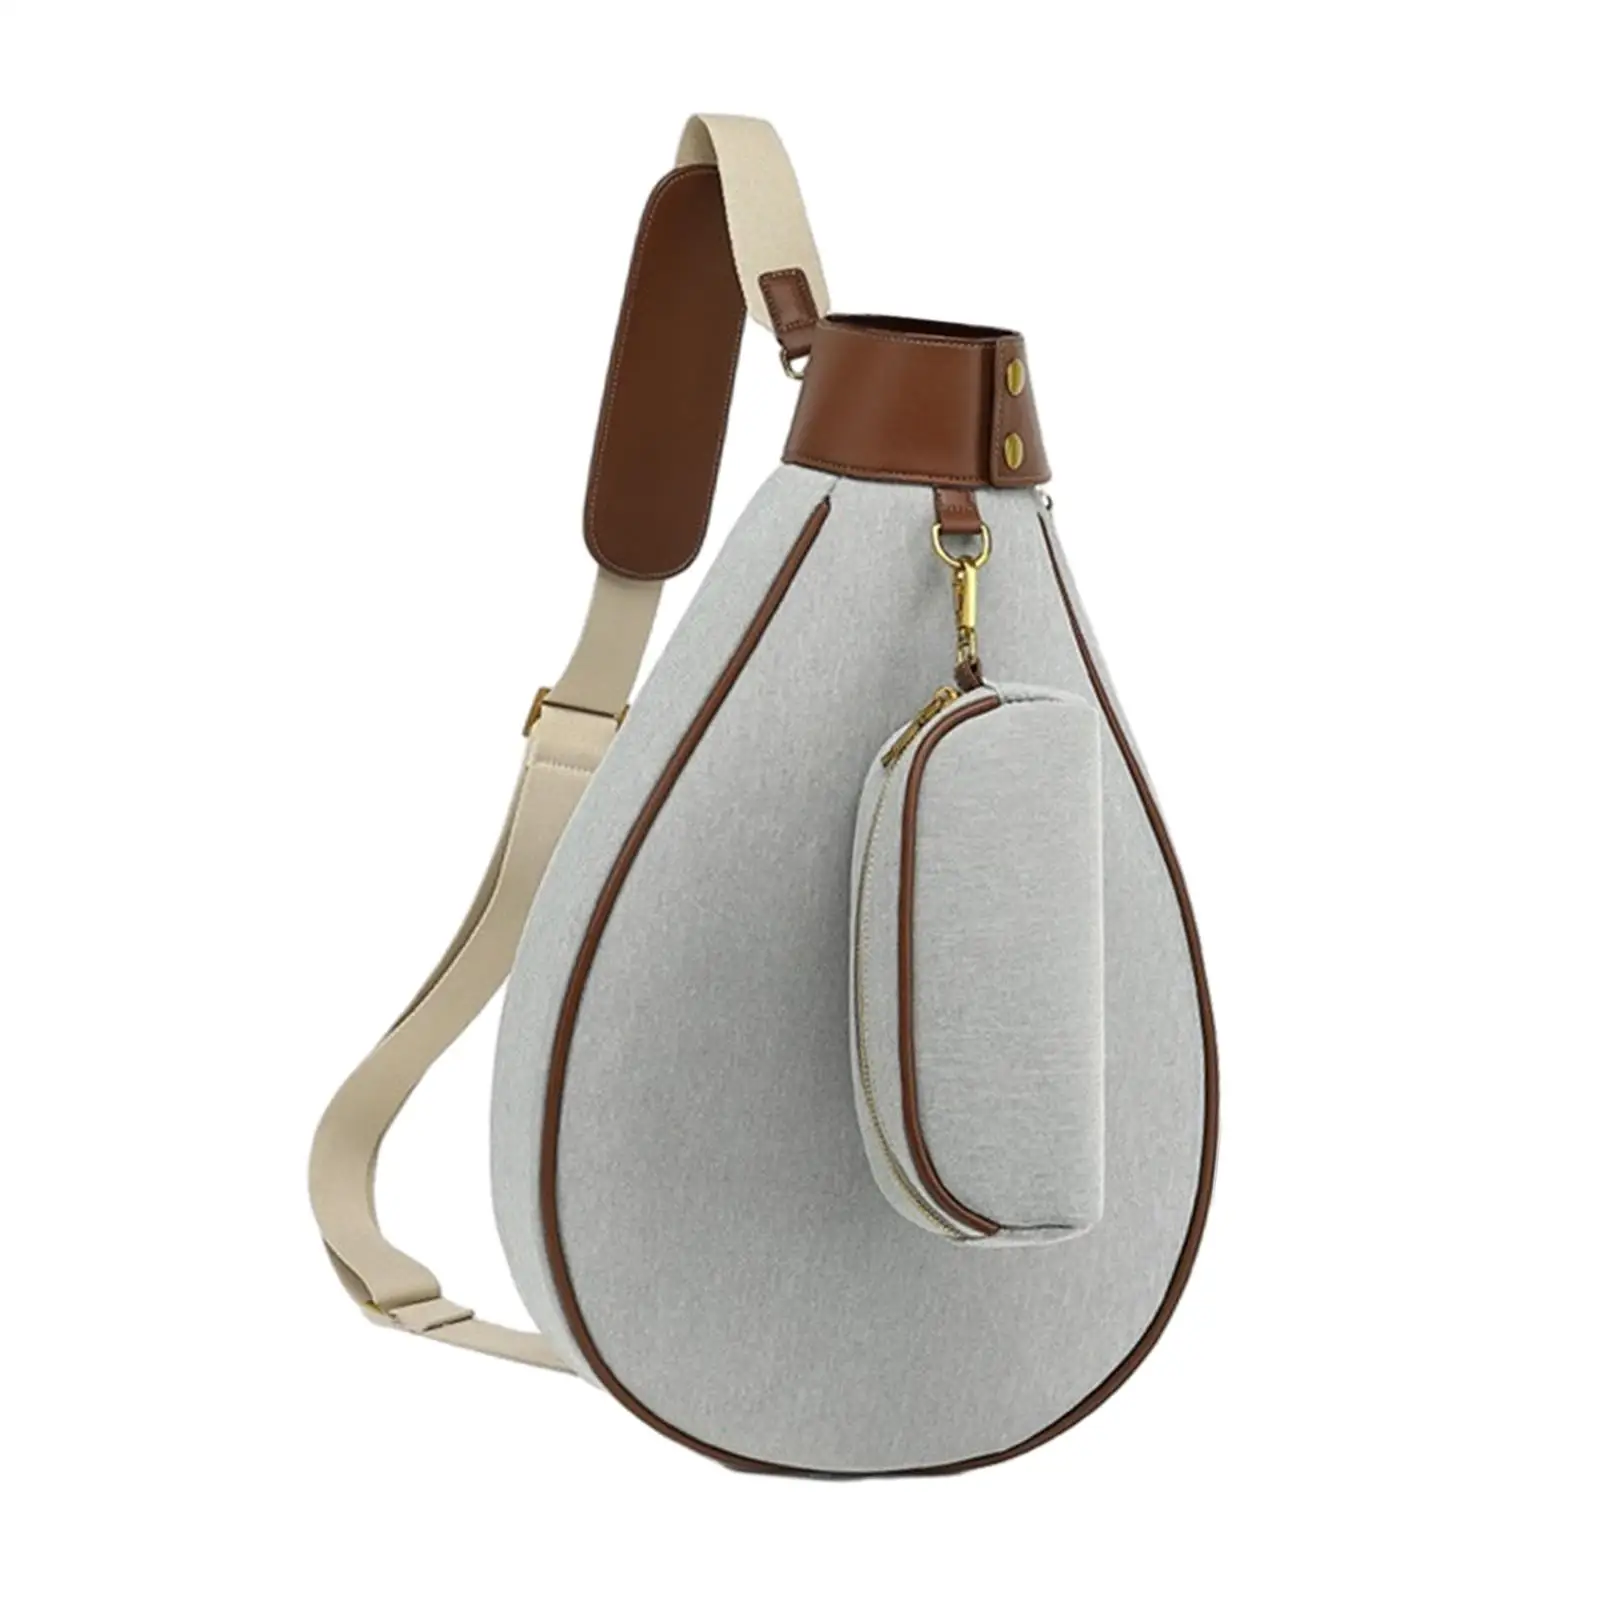 Tennis Bag Carrying Bag Portable Large Capacity Tennis Racket Bag for Badminton/squash Racquet/Tennis/Pickleball and Accessories